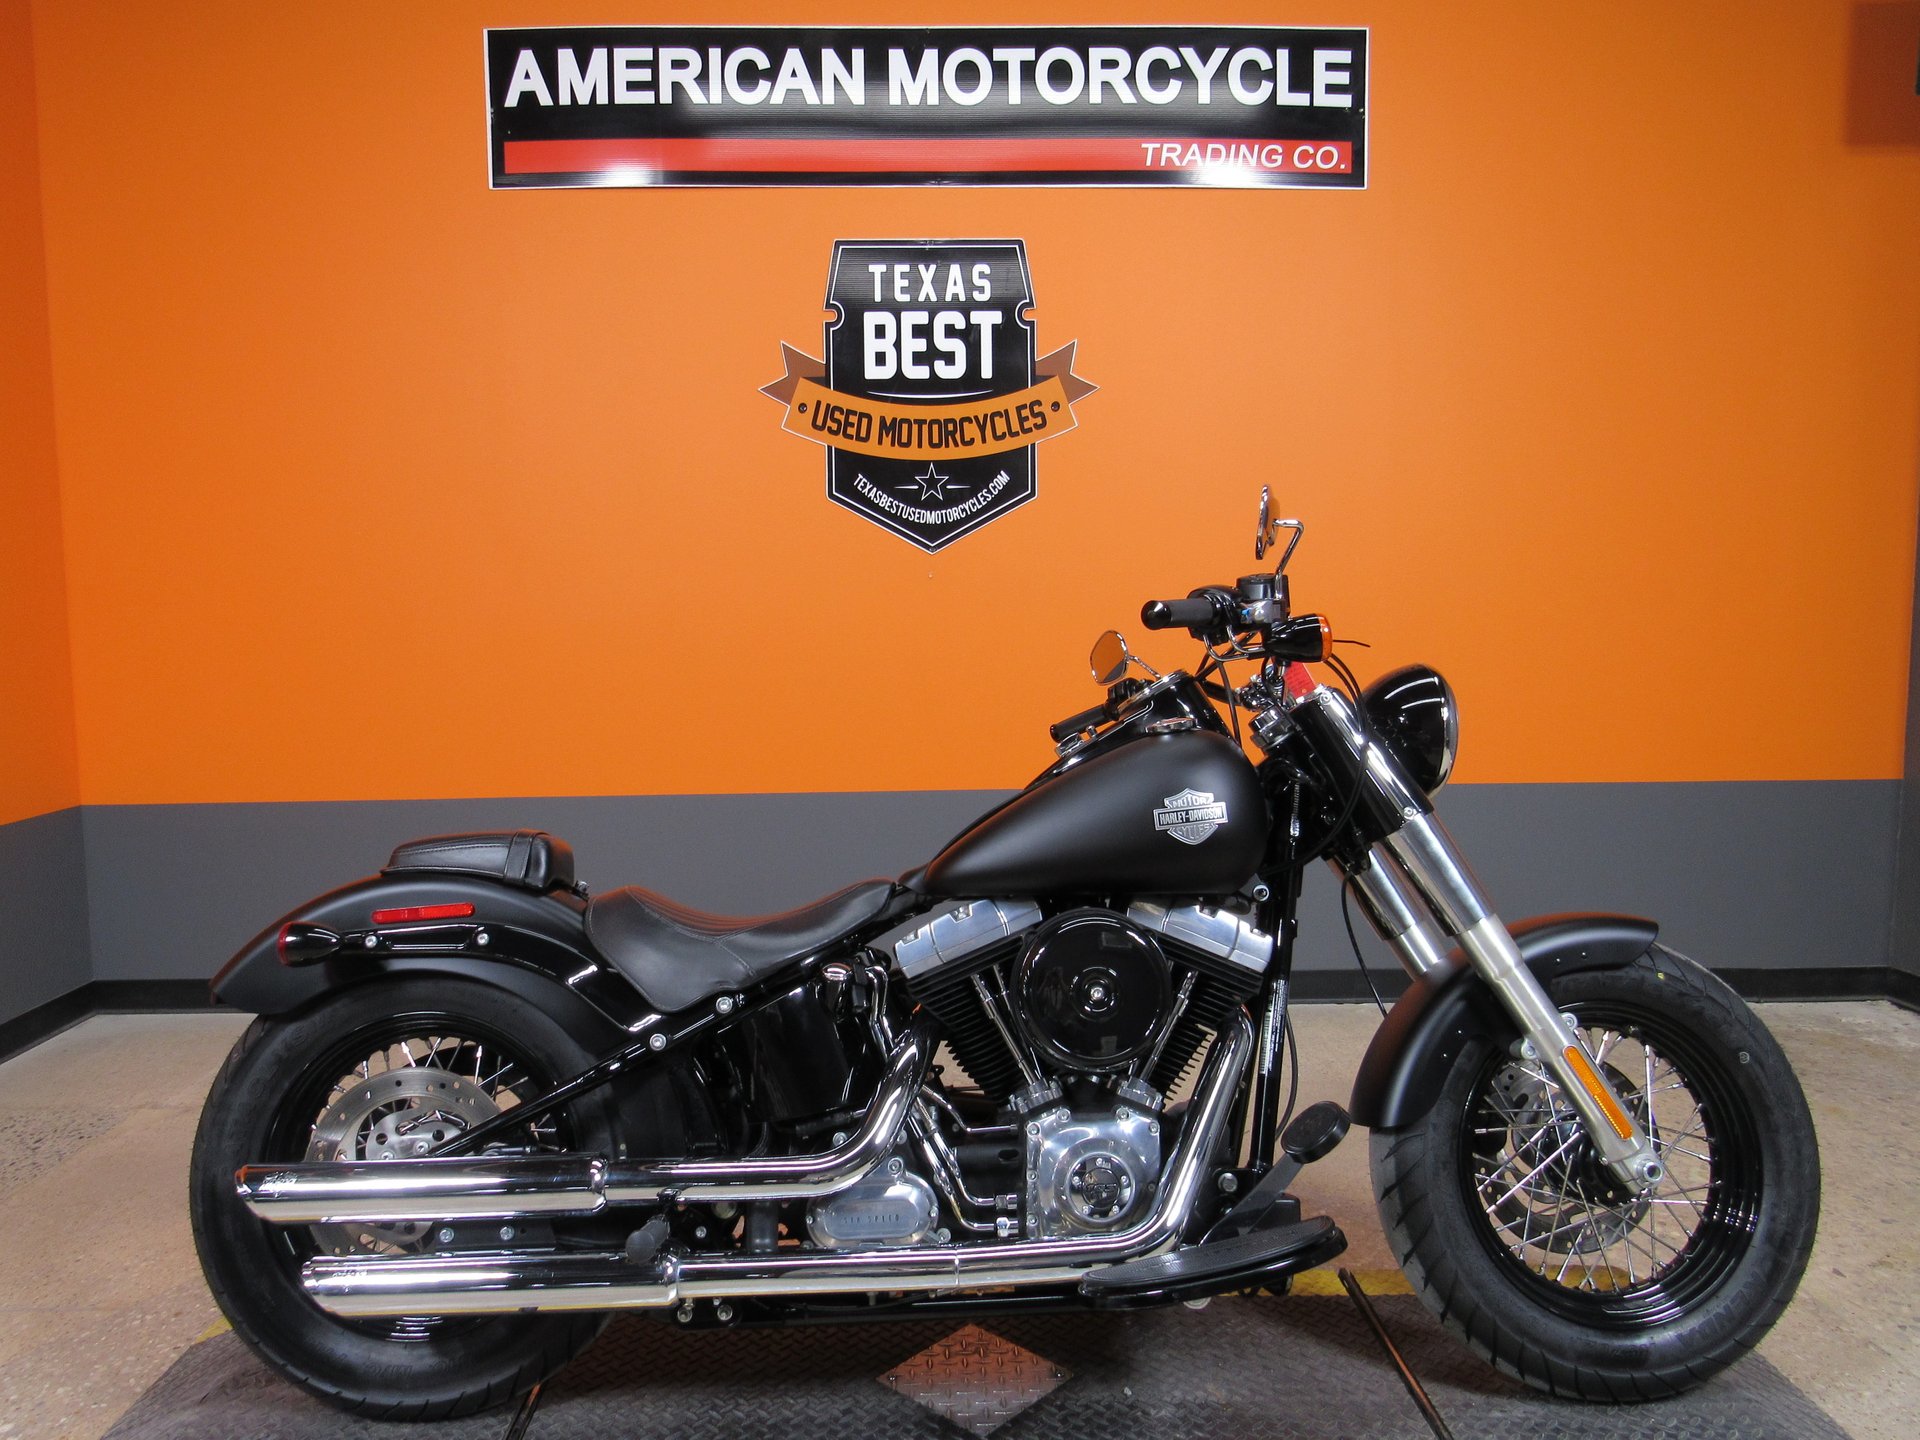 2013 Harley Davidson Softail Slim American Motorcycle Trading Company Used Harley Davidson Motorcycles